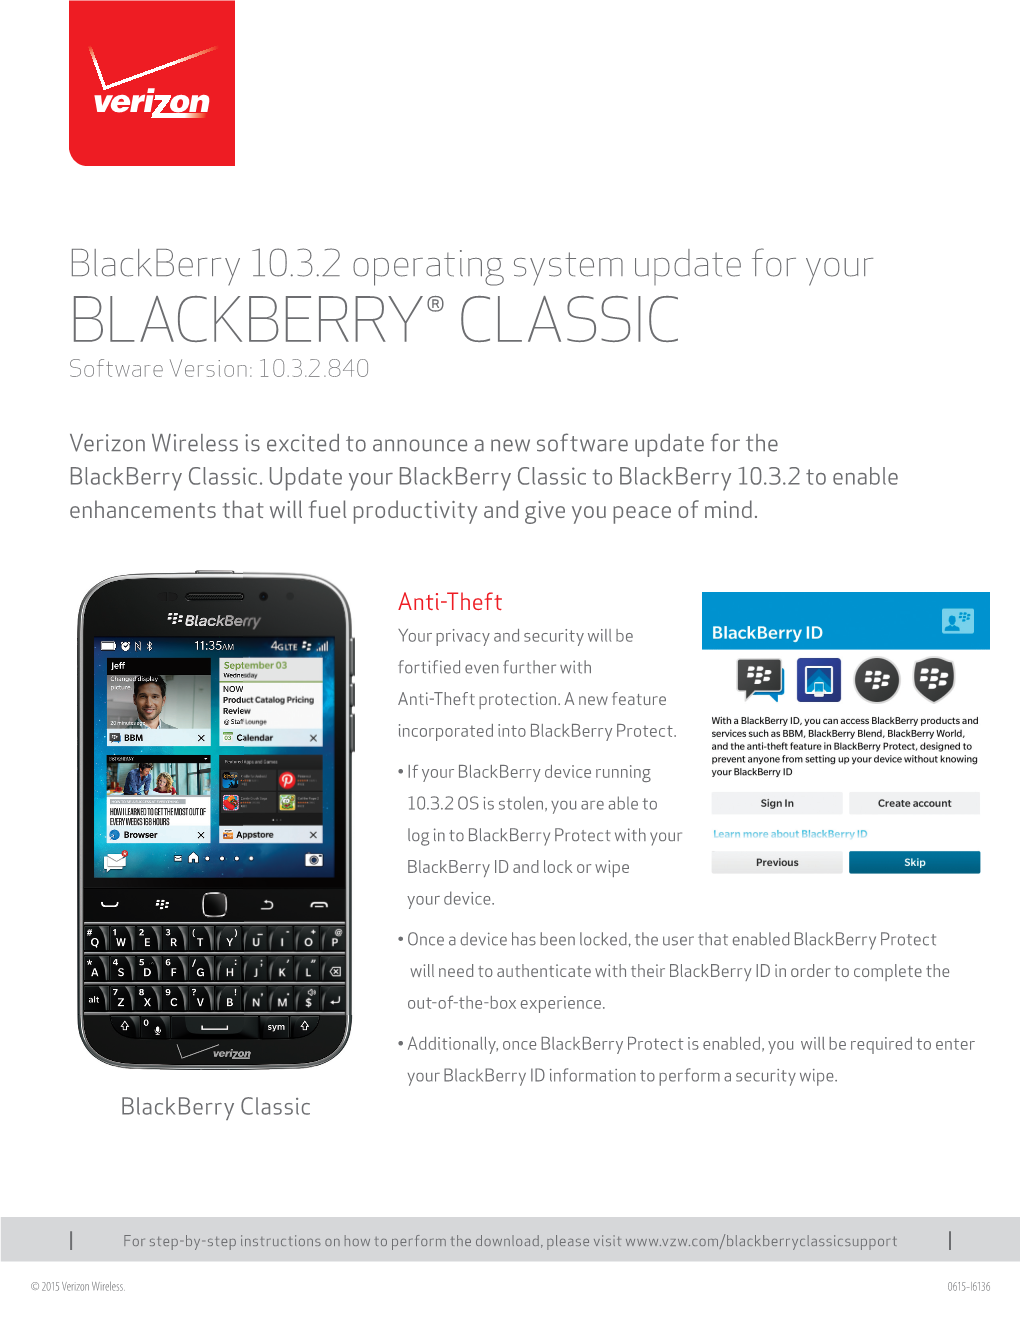 SLSE-I6136-Blackberry Classic SU-V5.Indd